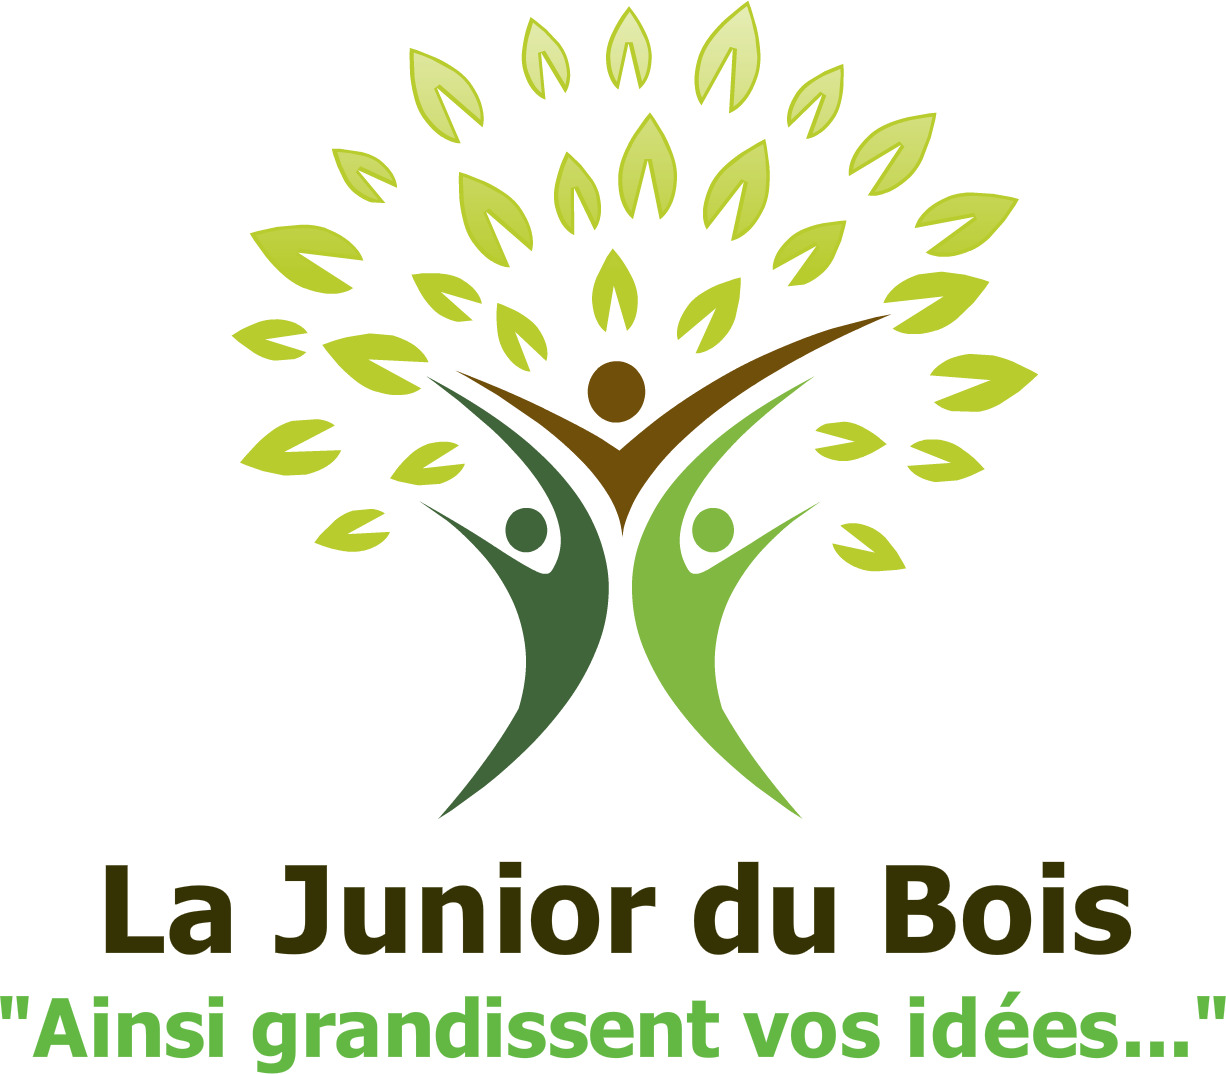 La Junior du Bois (JDB)